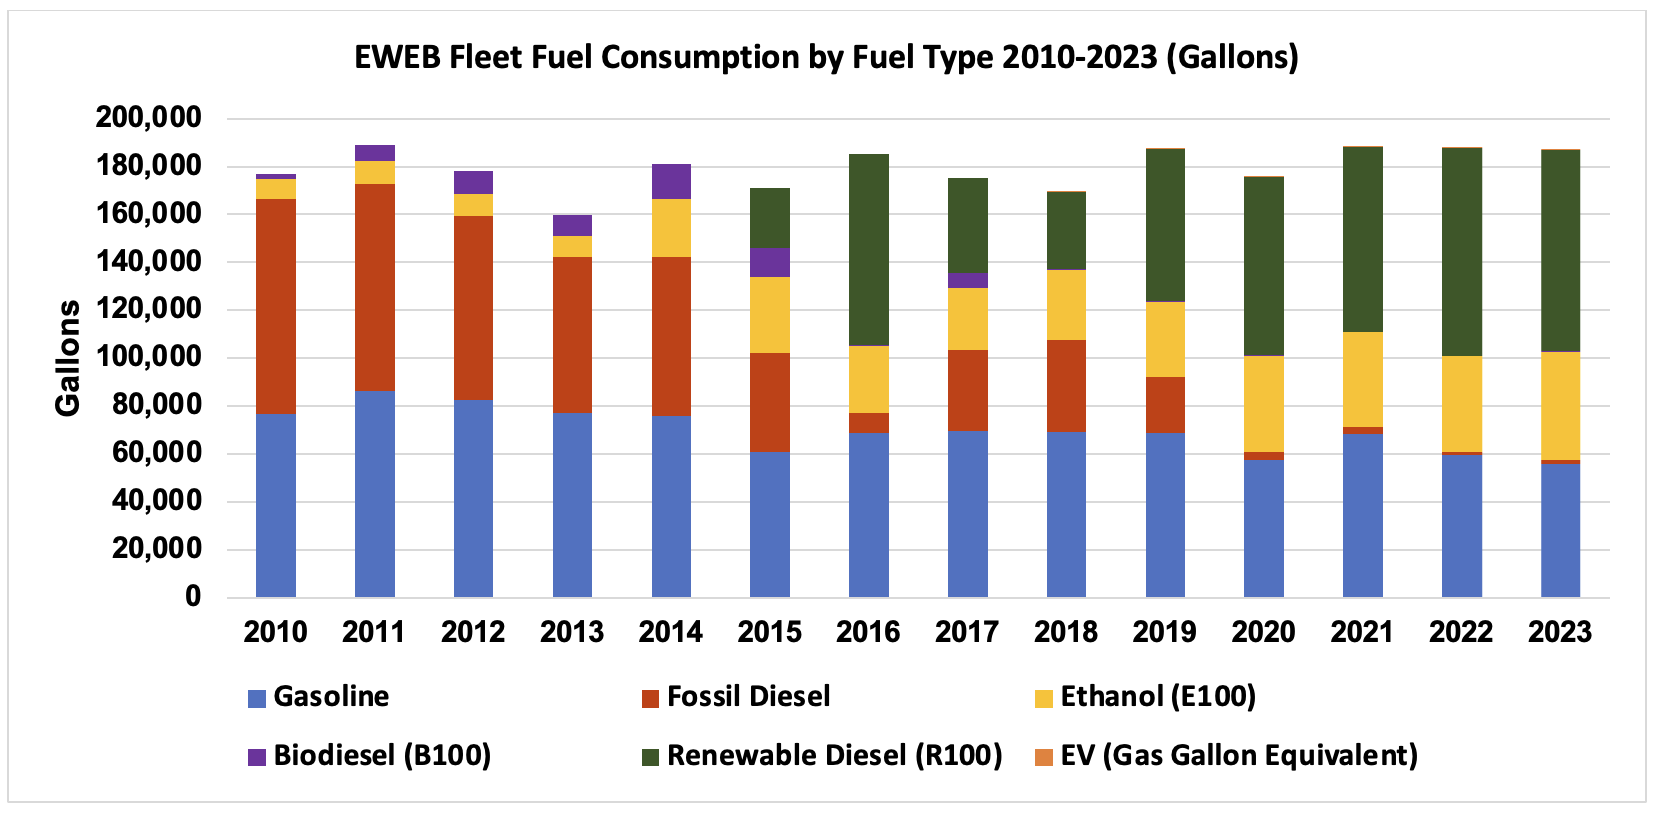 EWEB Fleet Fuel Consumption by Fuel Type, 2010-2023 (Gallons)